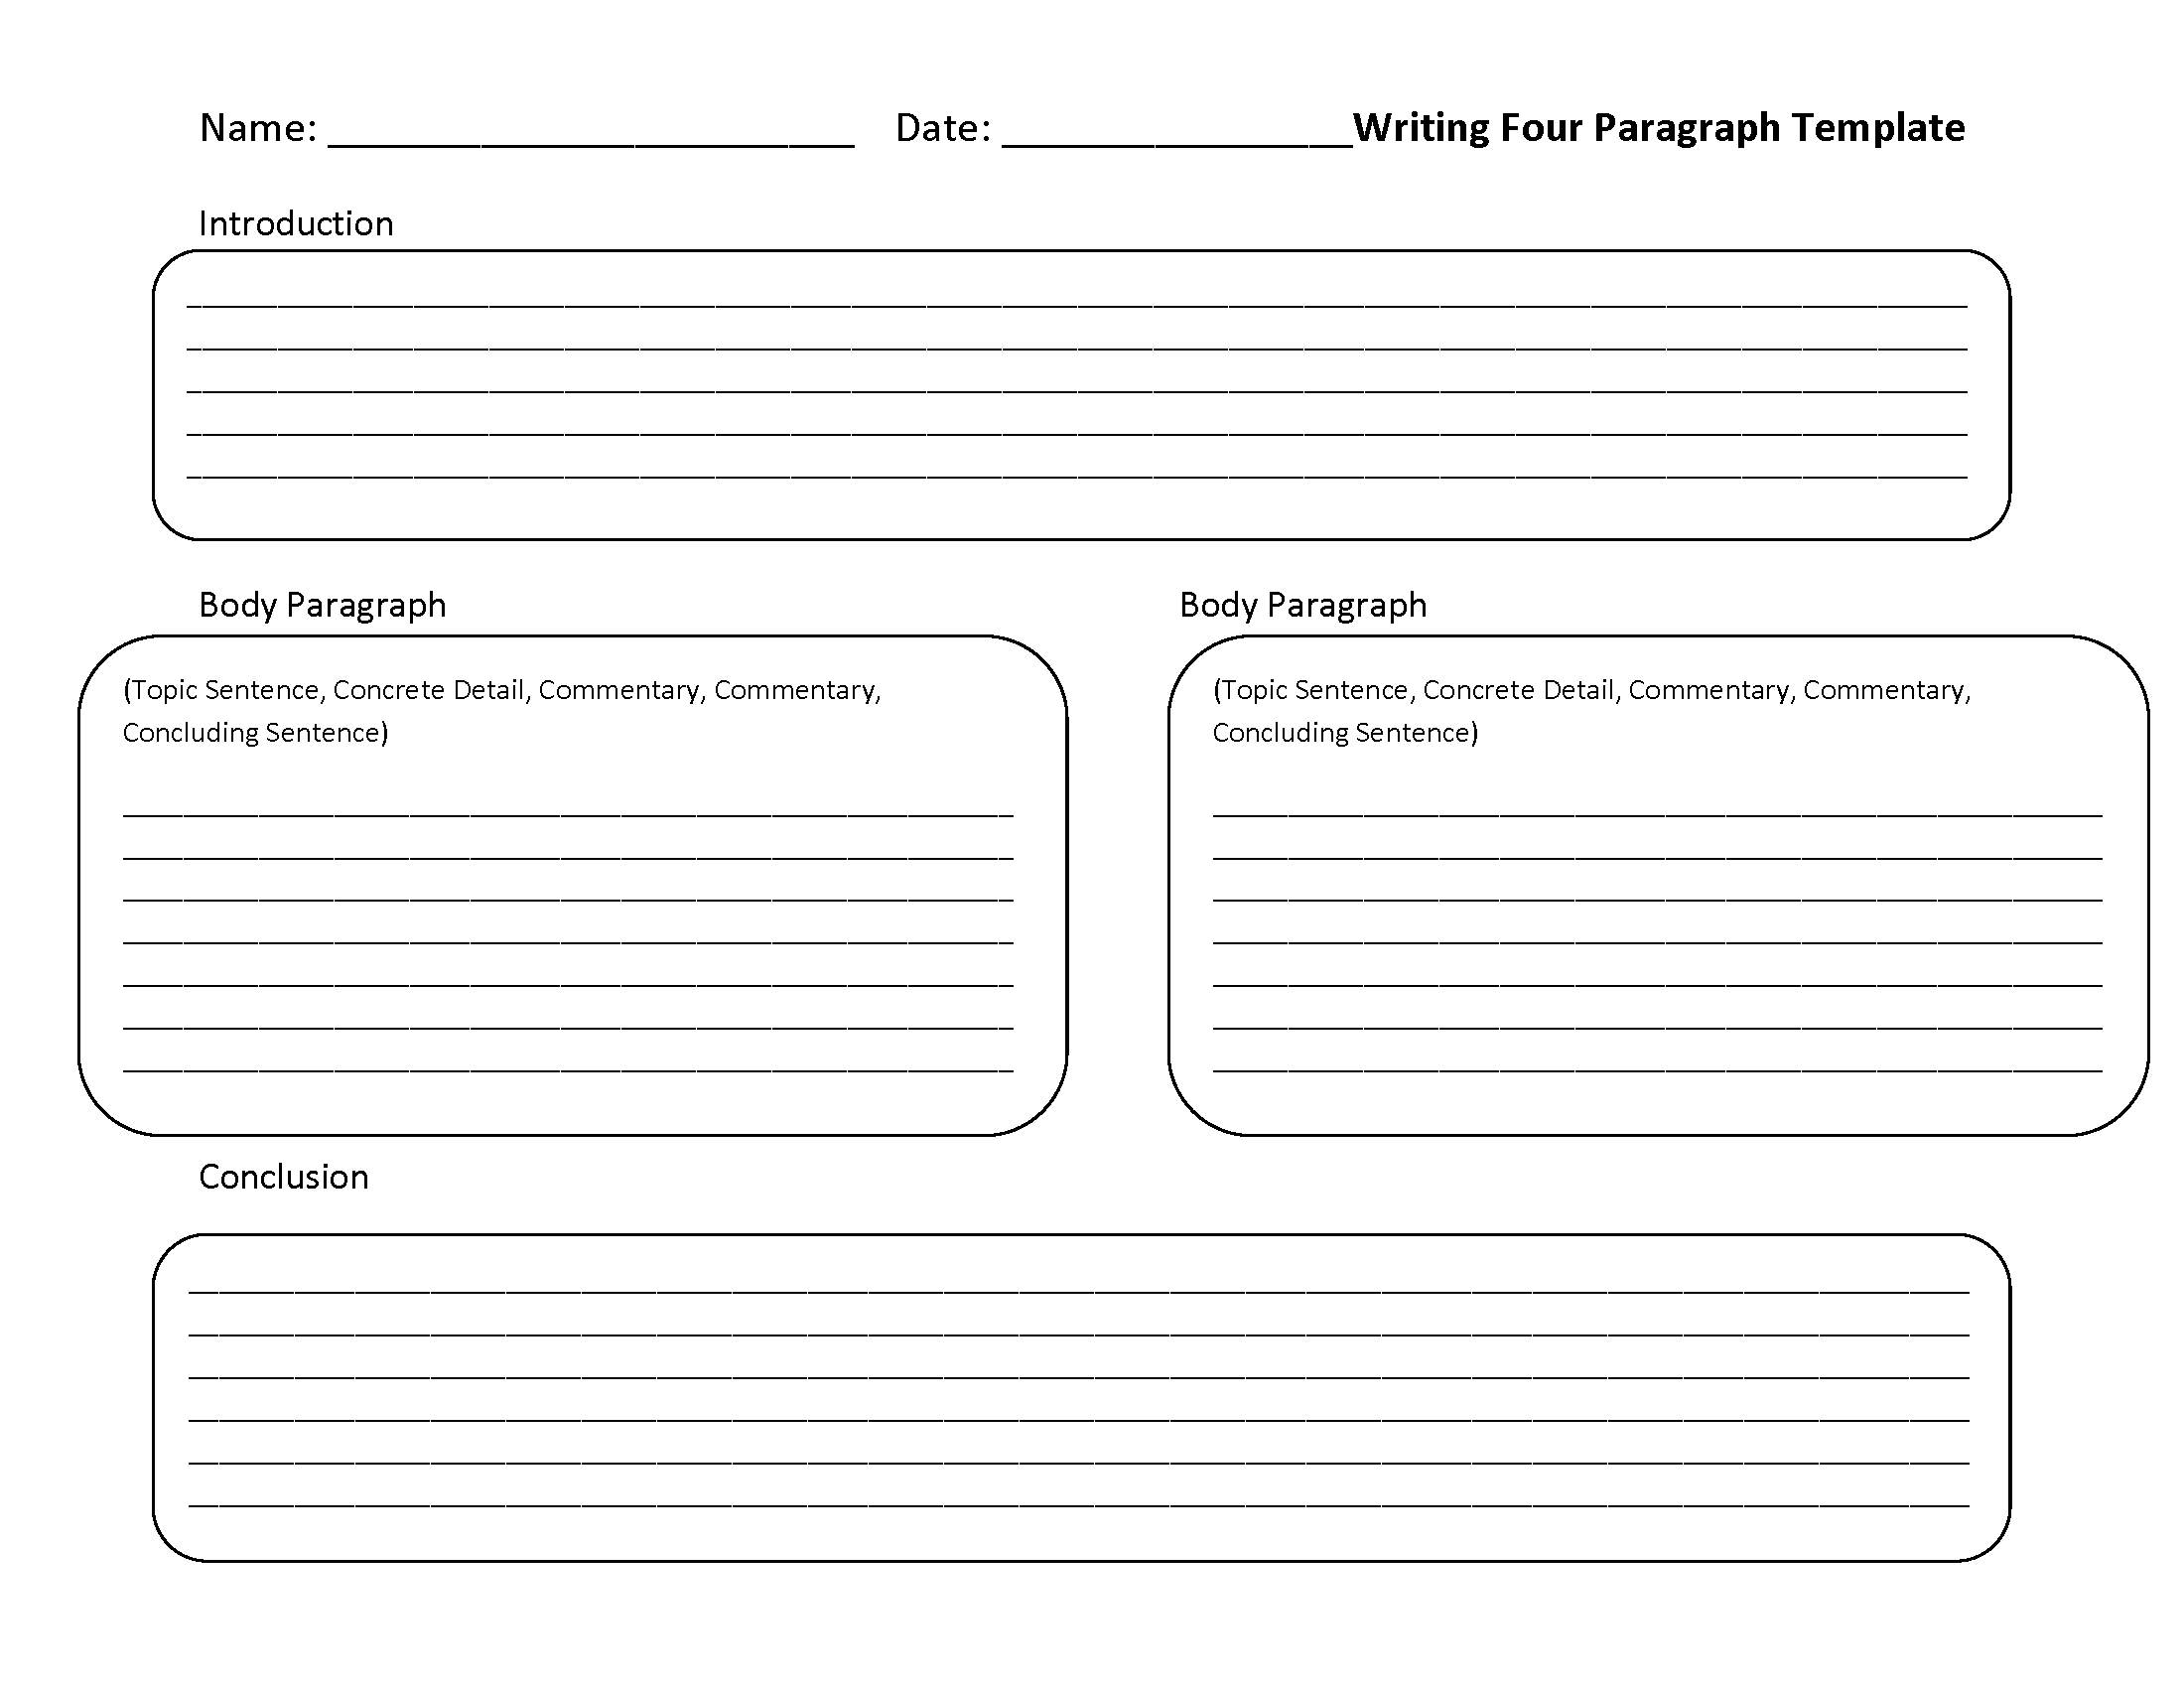 Englishlinx | Writing Worksheets - 6Th Grade Writing Worksheets Printable Free